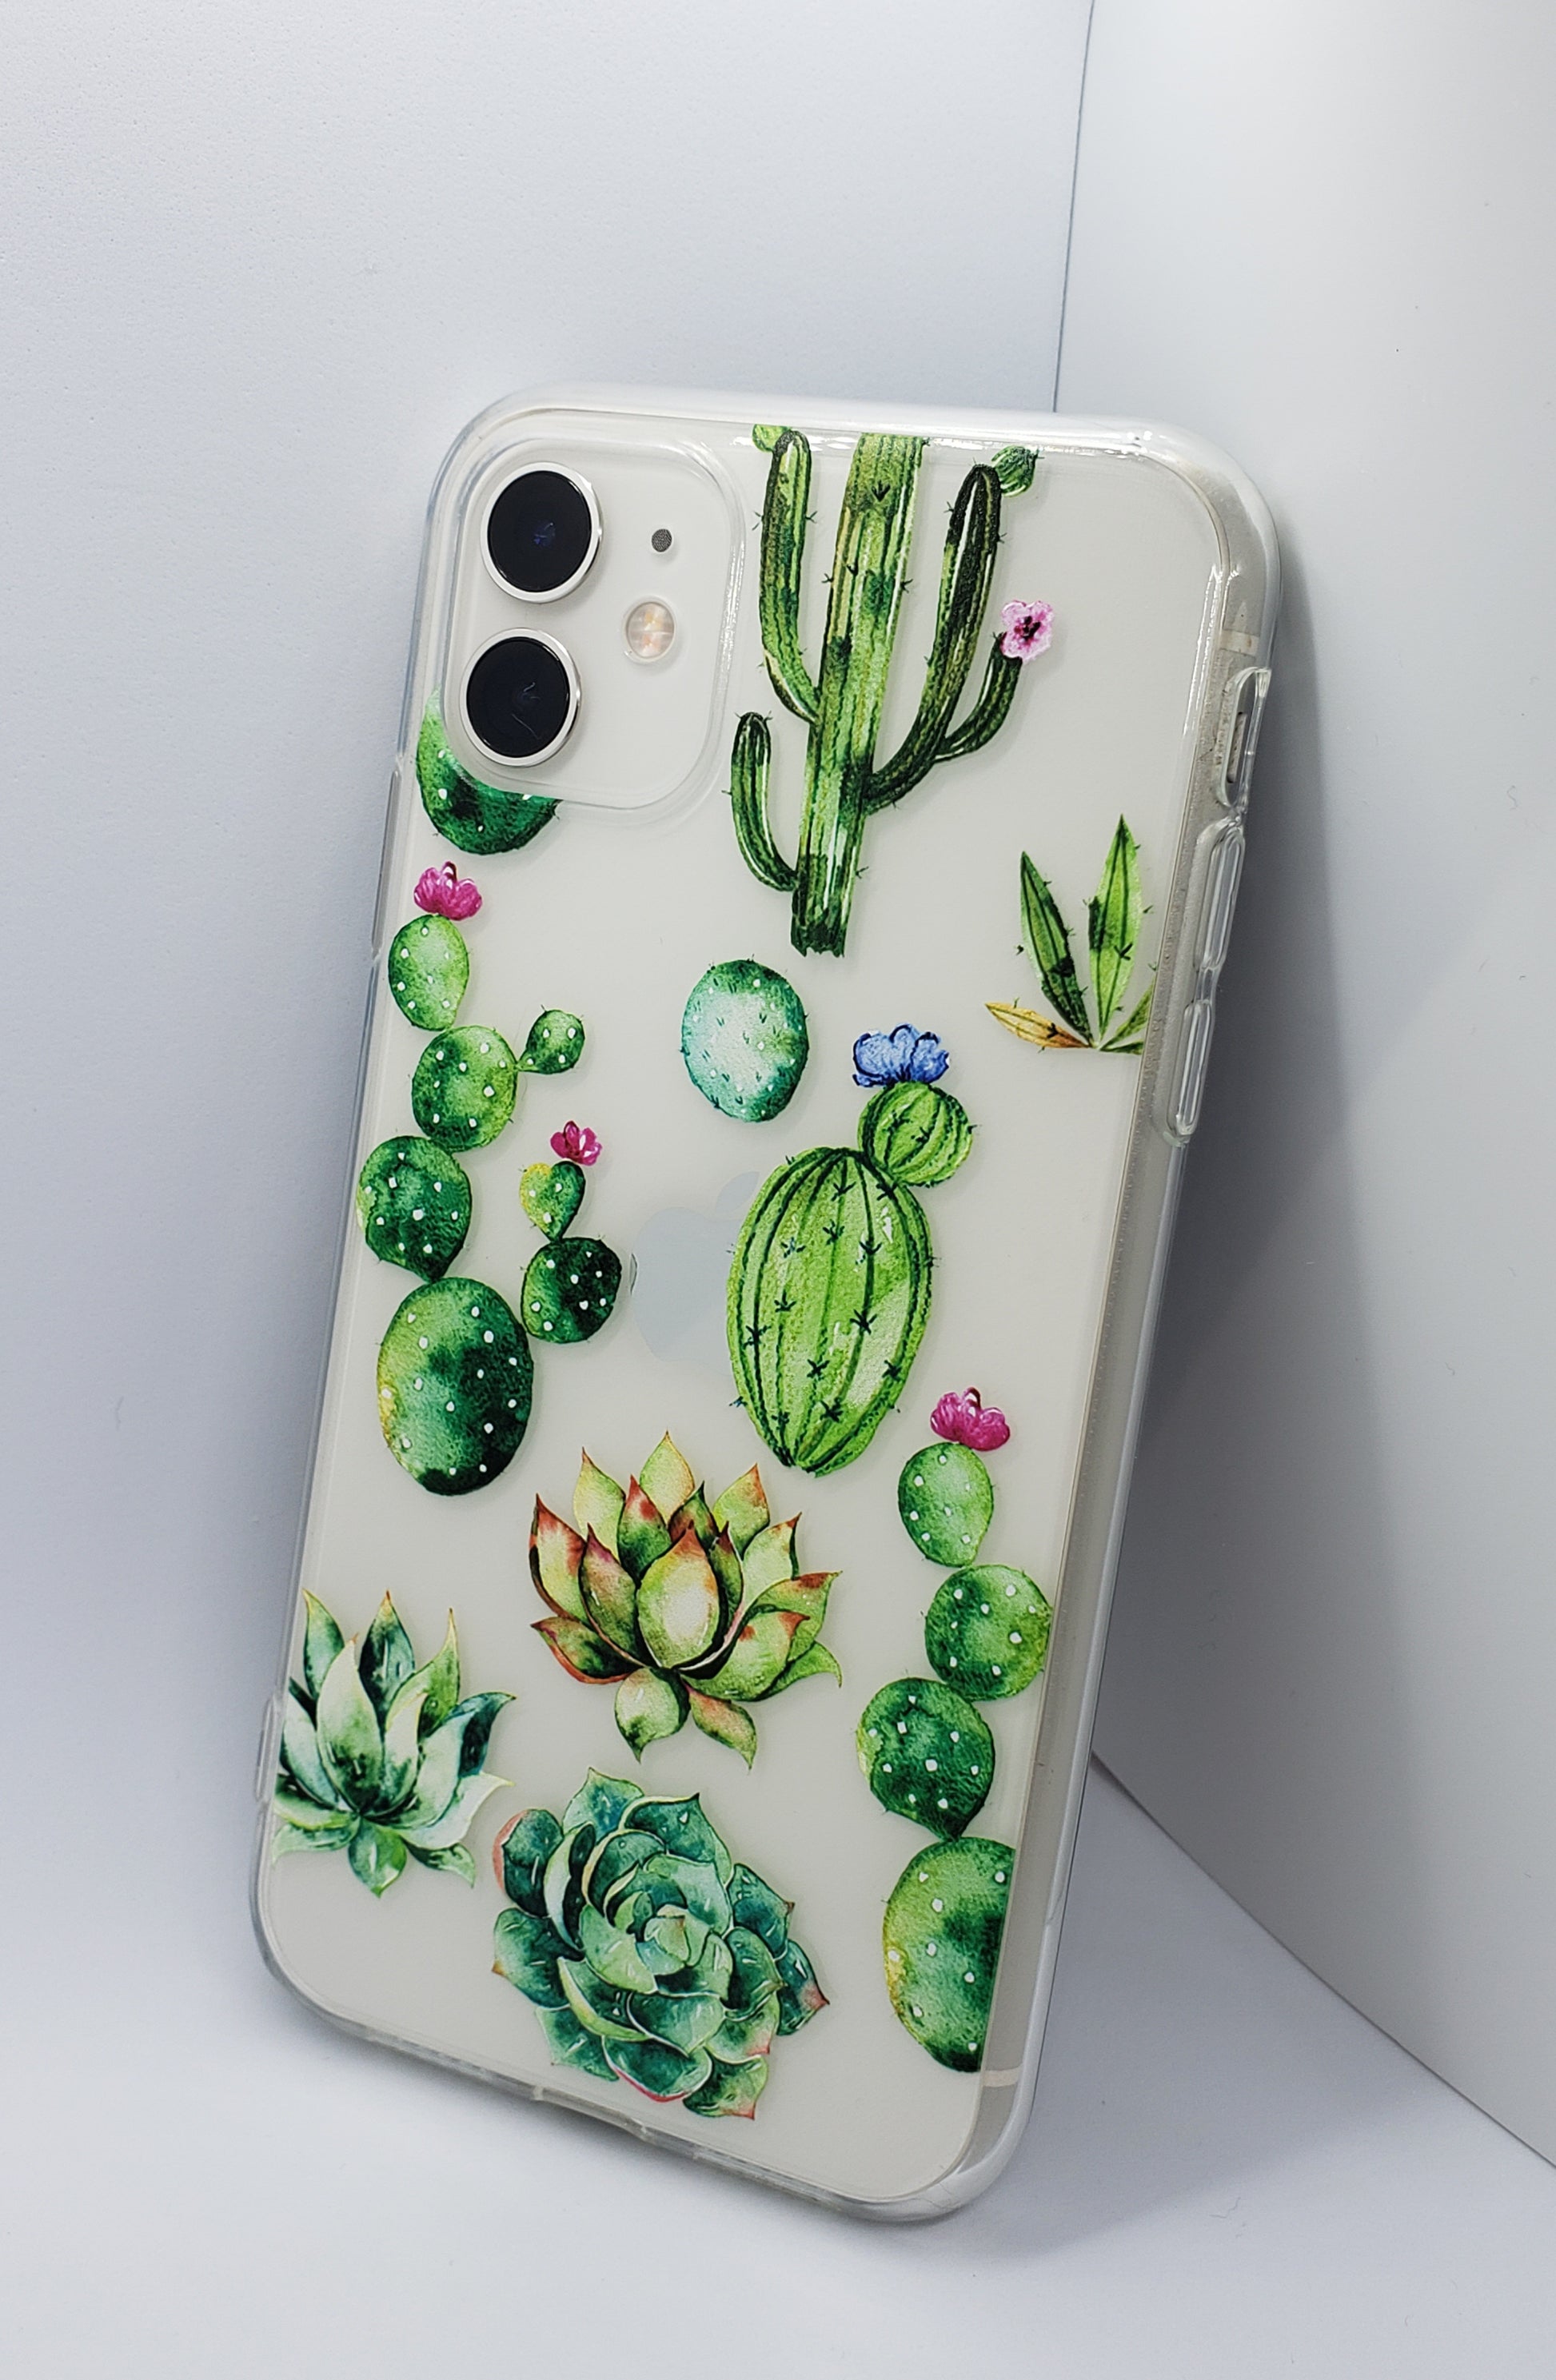 Cactus flowers iphone 11 case hoolaboutique